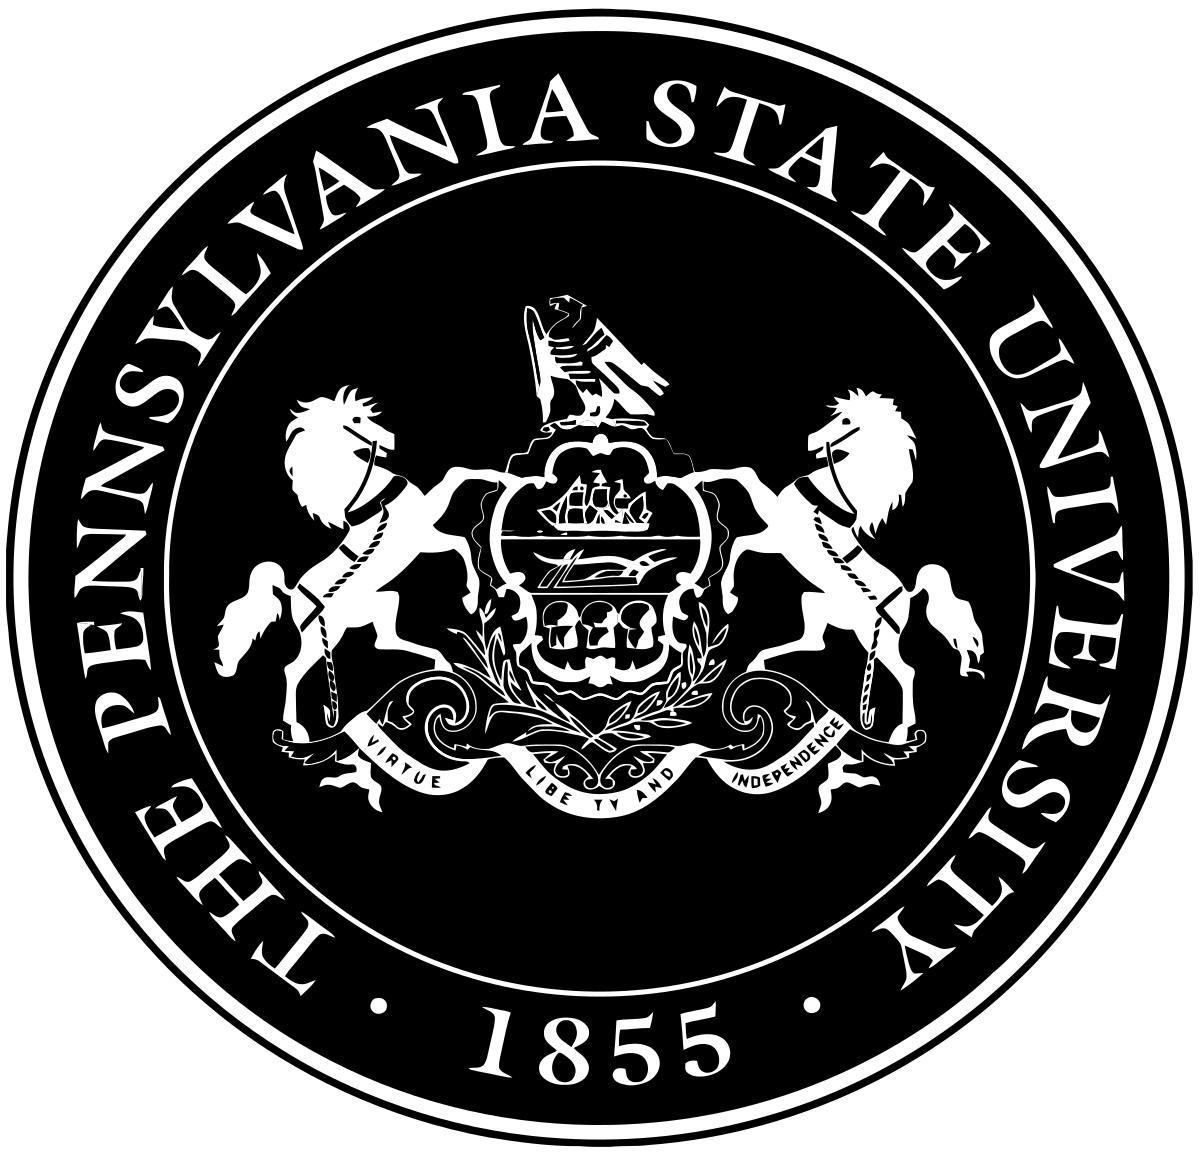 Graduate Scholarships for International Students at Pennsylvania State University in USA Scholarship